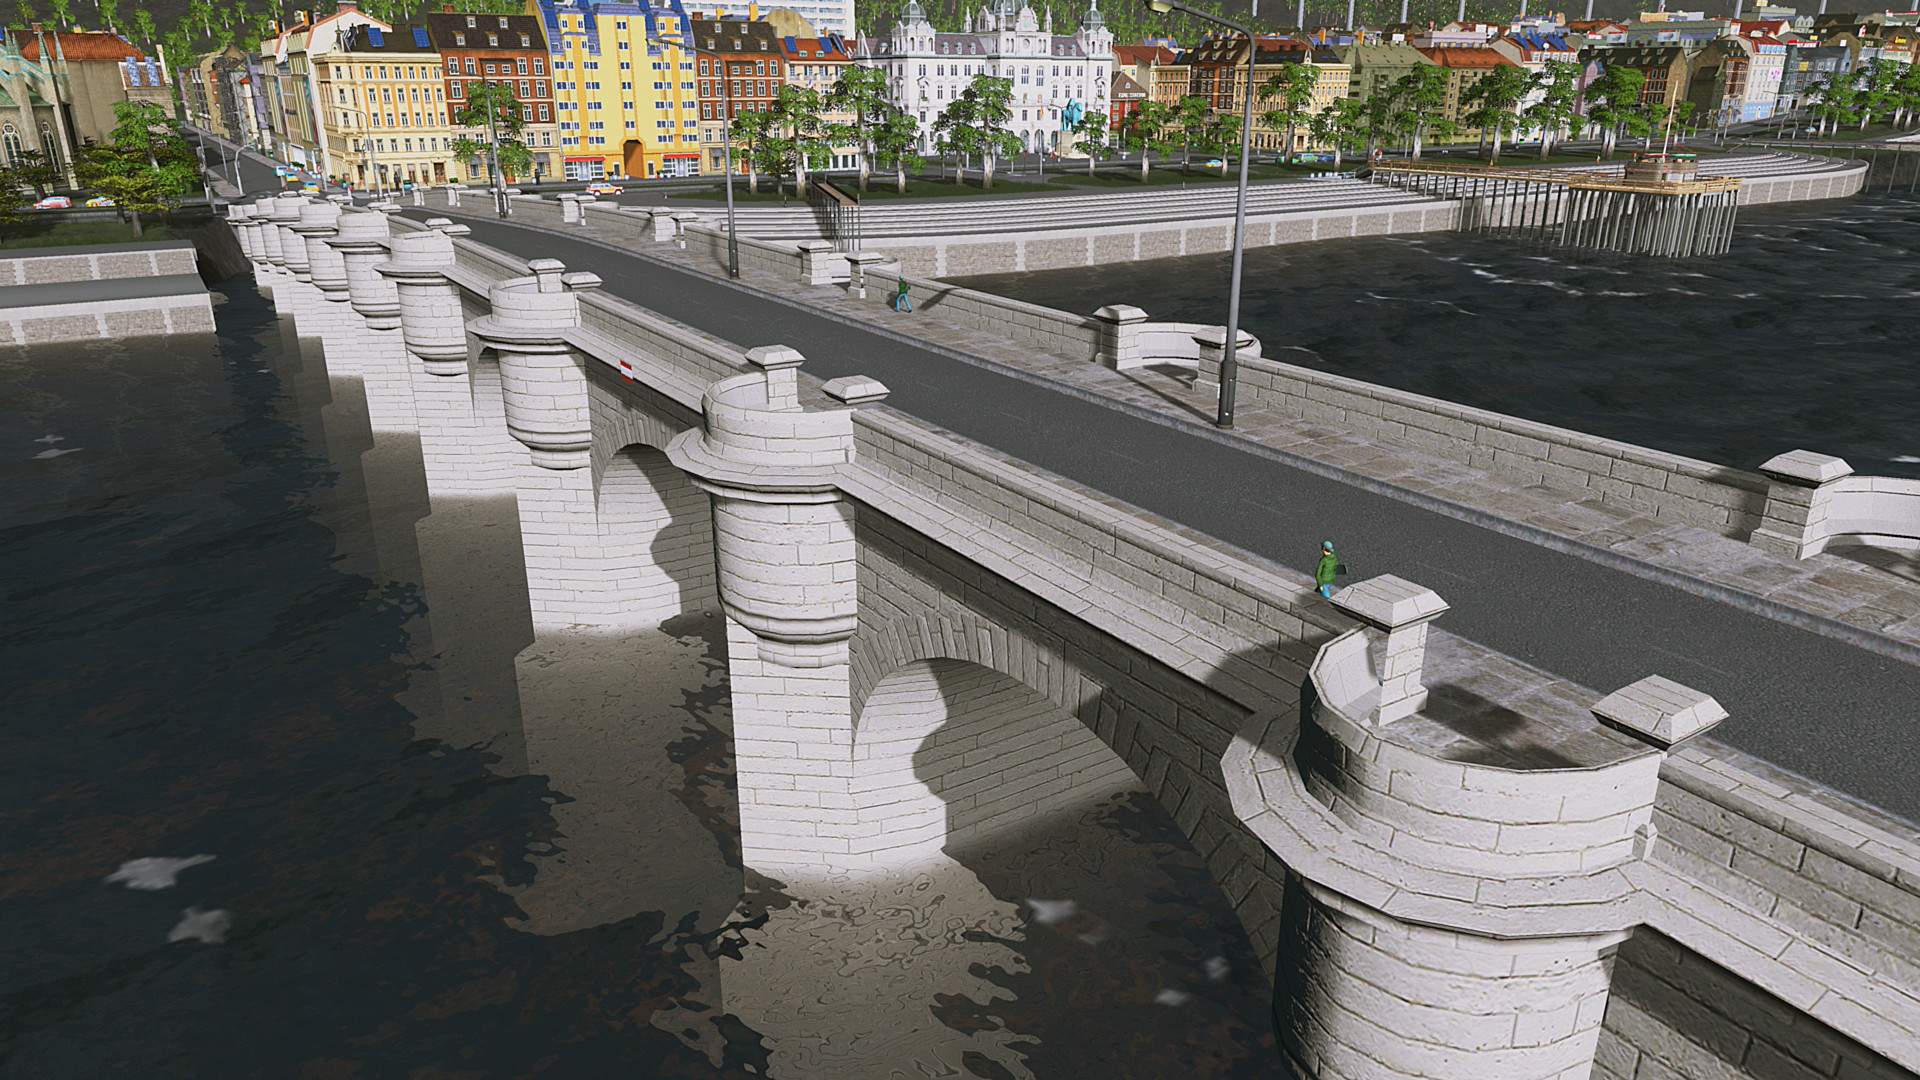 Cities: Skylines - Content Creator Pack: Bridges & Piers DLC Steam CD Key